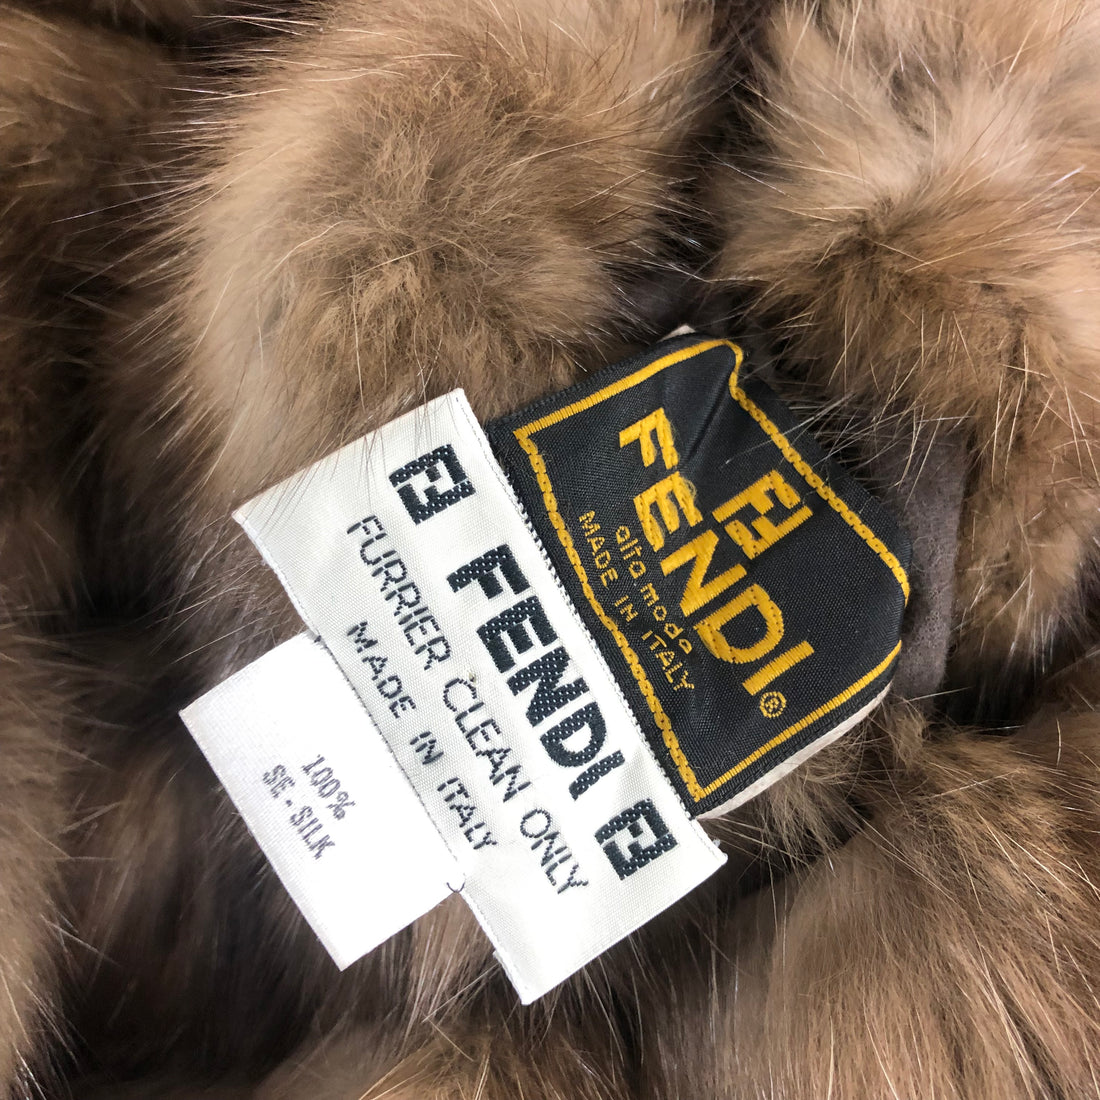 Fendi Russian Dark Sable Fur Coat with Gold Chain Belt - 6 – I MISS YOU ...